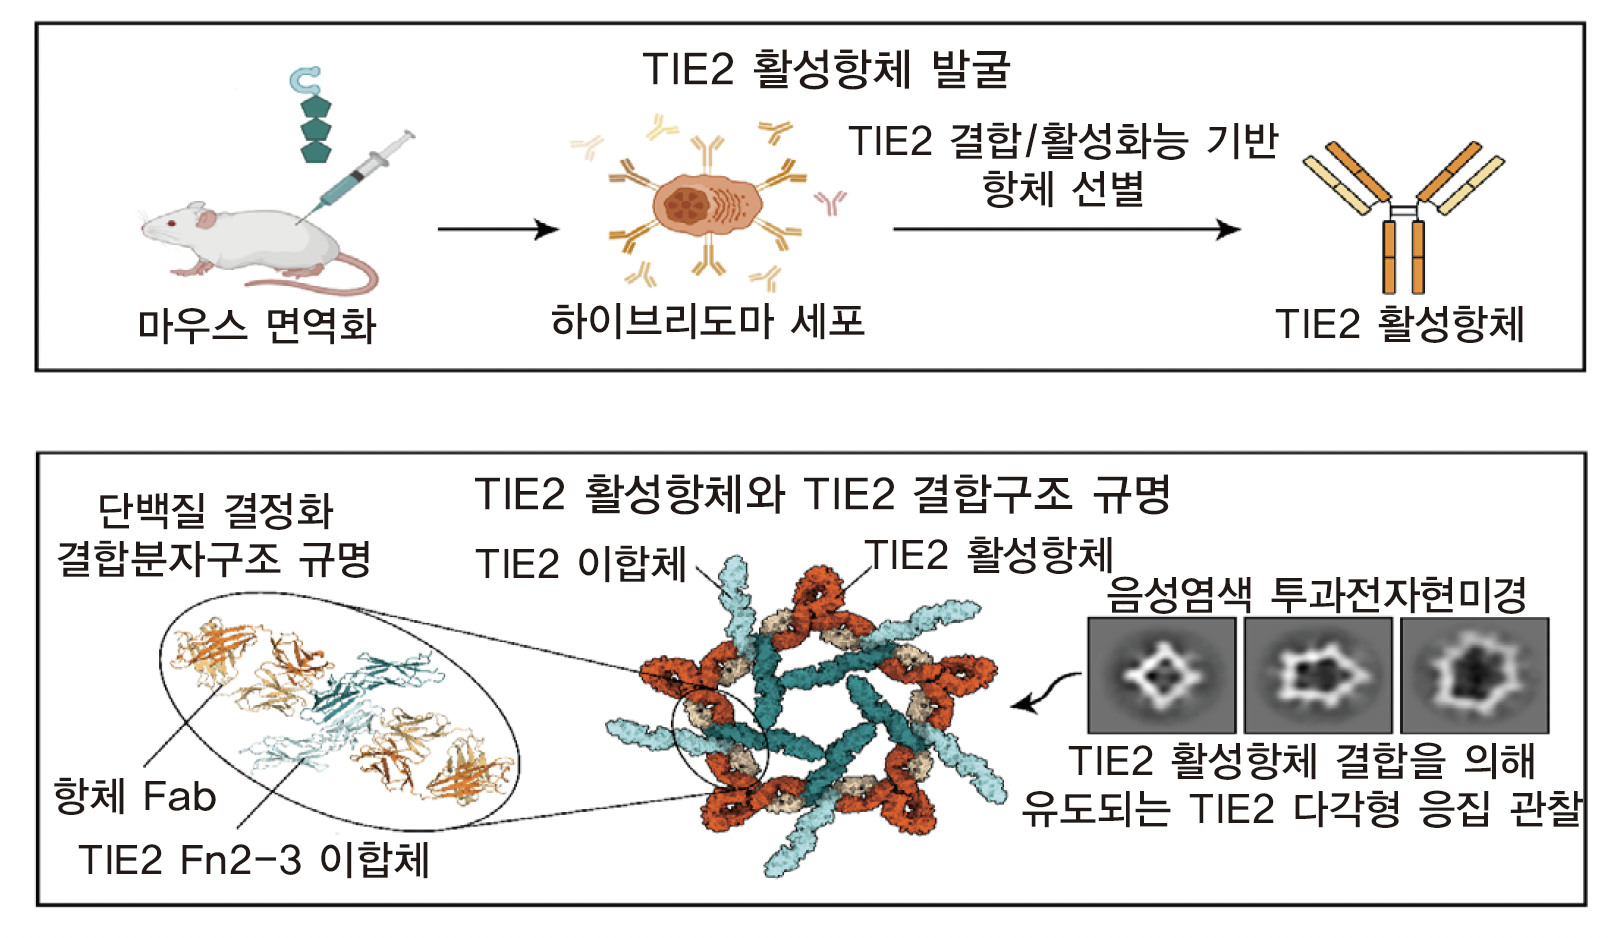 TIE2 활성항체 발굴, TIE2 활성항체와 TIE2 결합구조 규명 (김호민 교수 제공)손상된 혈관을 정상화하는 TIE2 활성항체를 새롭게 개발하고, 3차원 분자구조를 밝혔다. 또한, TIE2 수용체와 TIE2 활성항체의 결합구조를 규명해냈다.